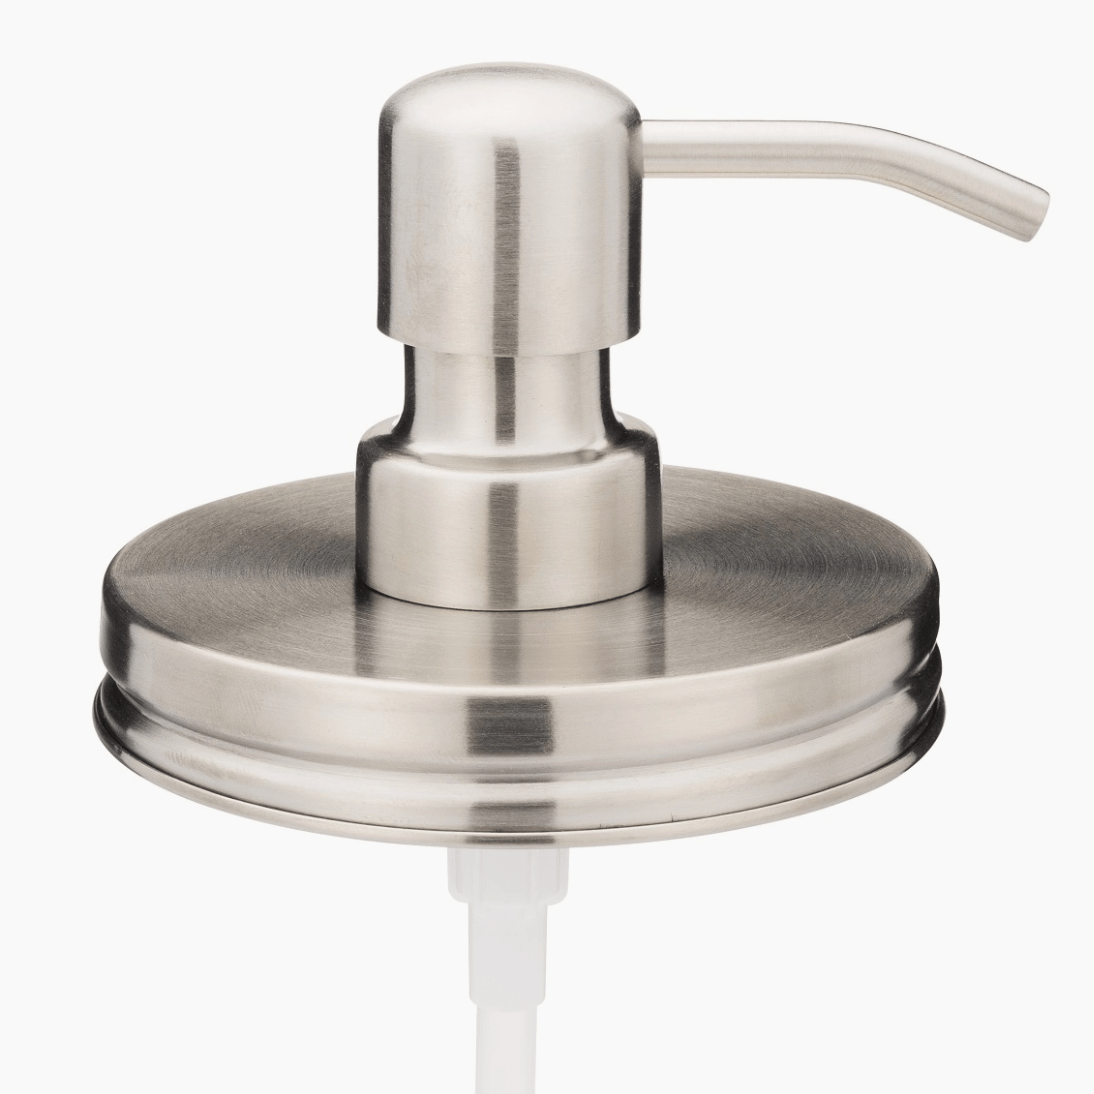 Quart Mason Jar Dish Soap Dispenser